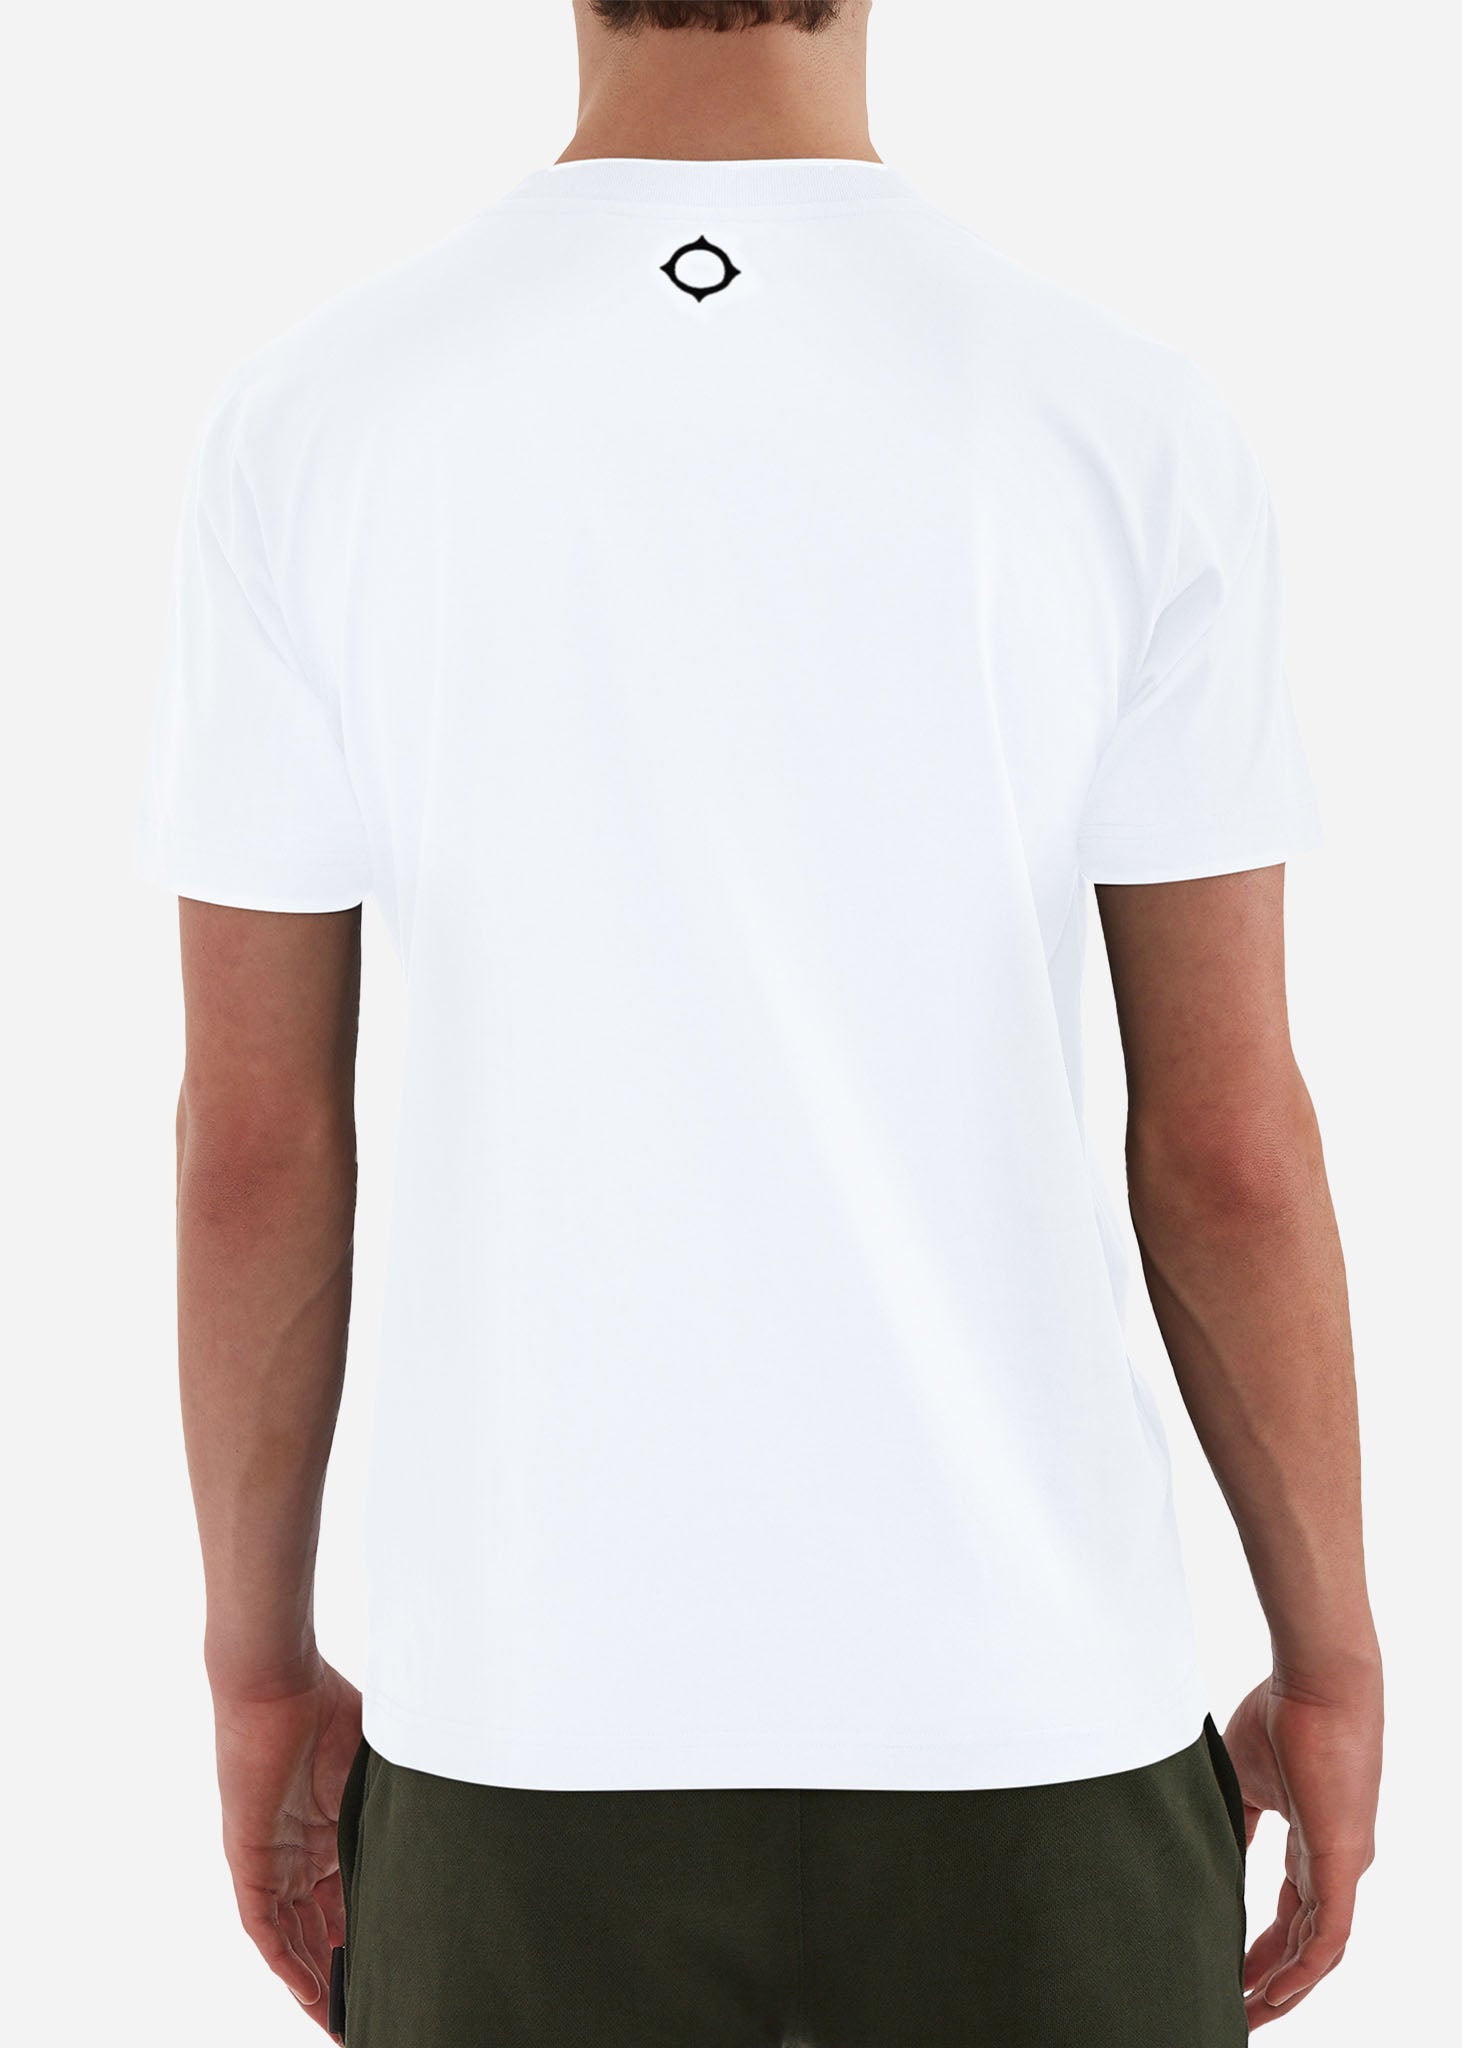 MA.Strum T-shirts  Chest print tee - optic white 